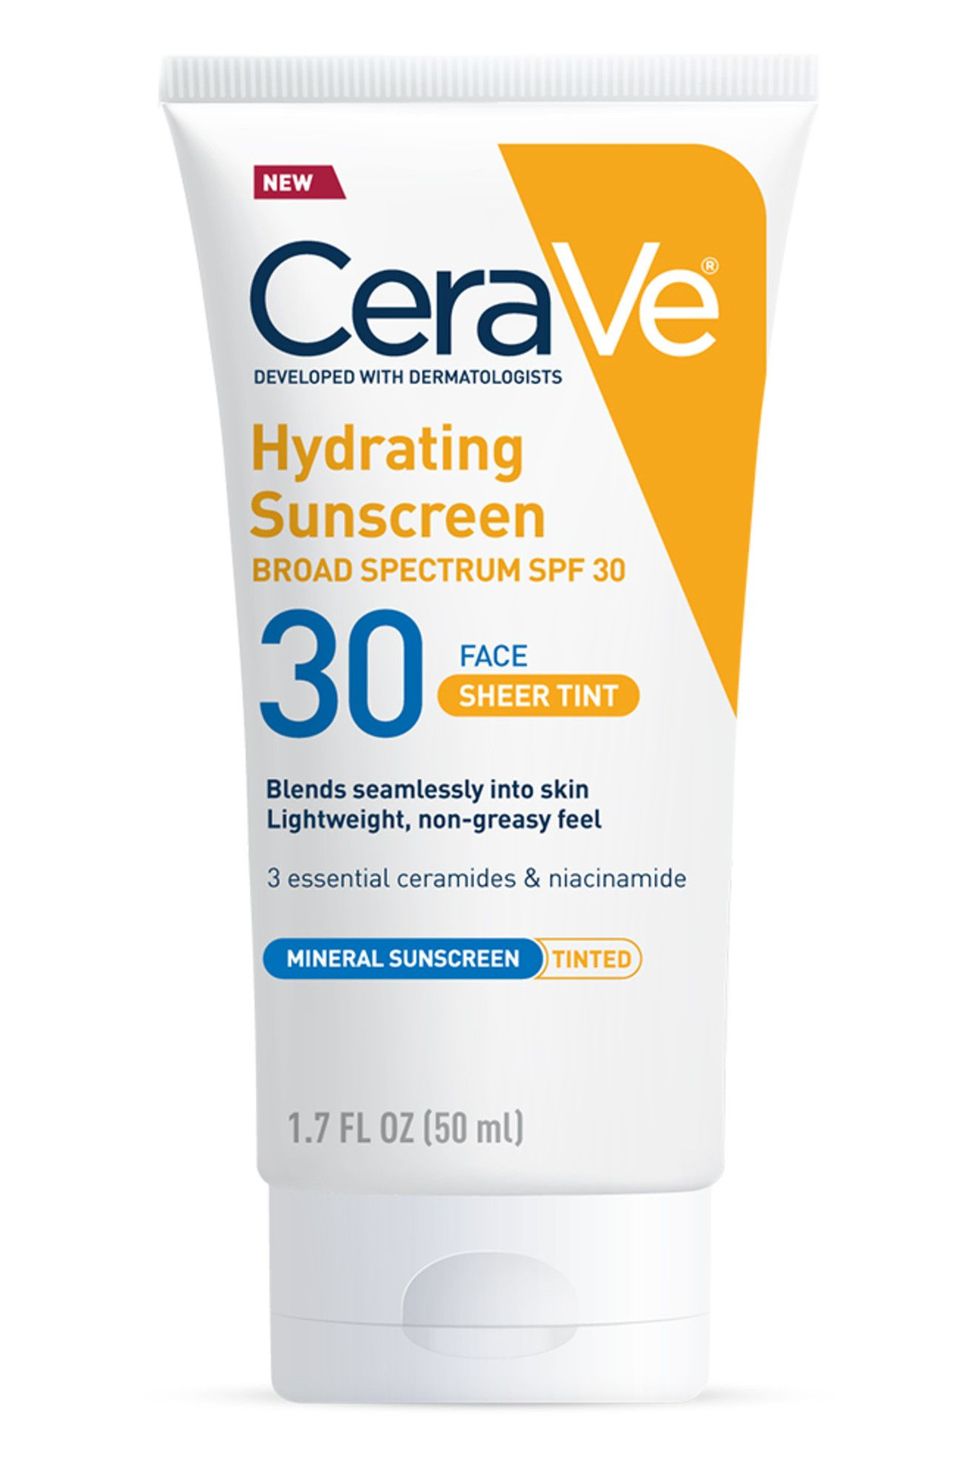 Hydrating Sunscreen Face Sheer Tint SPF 30